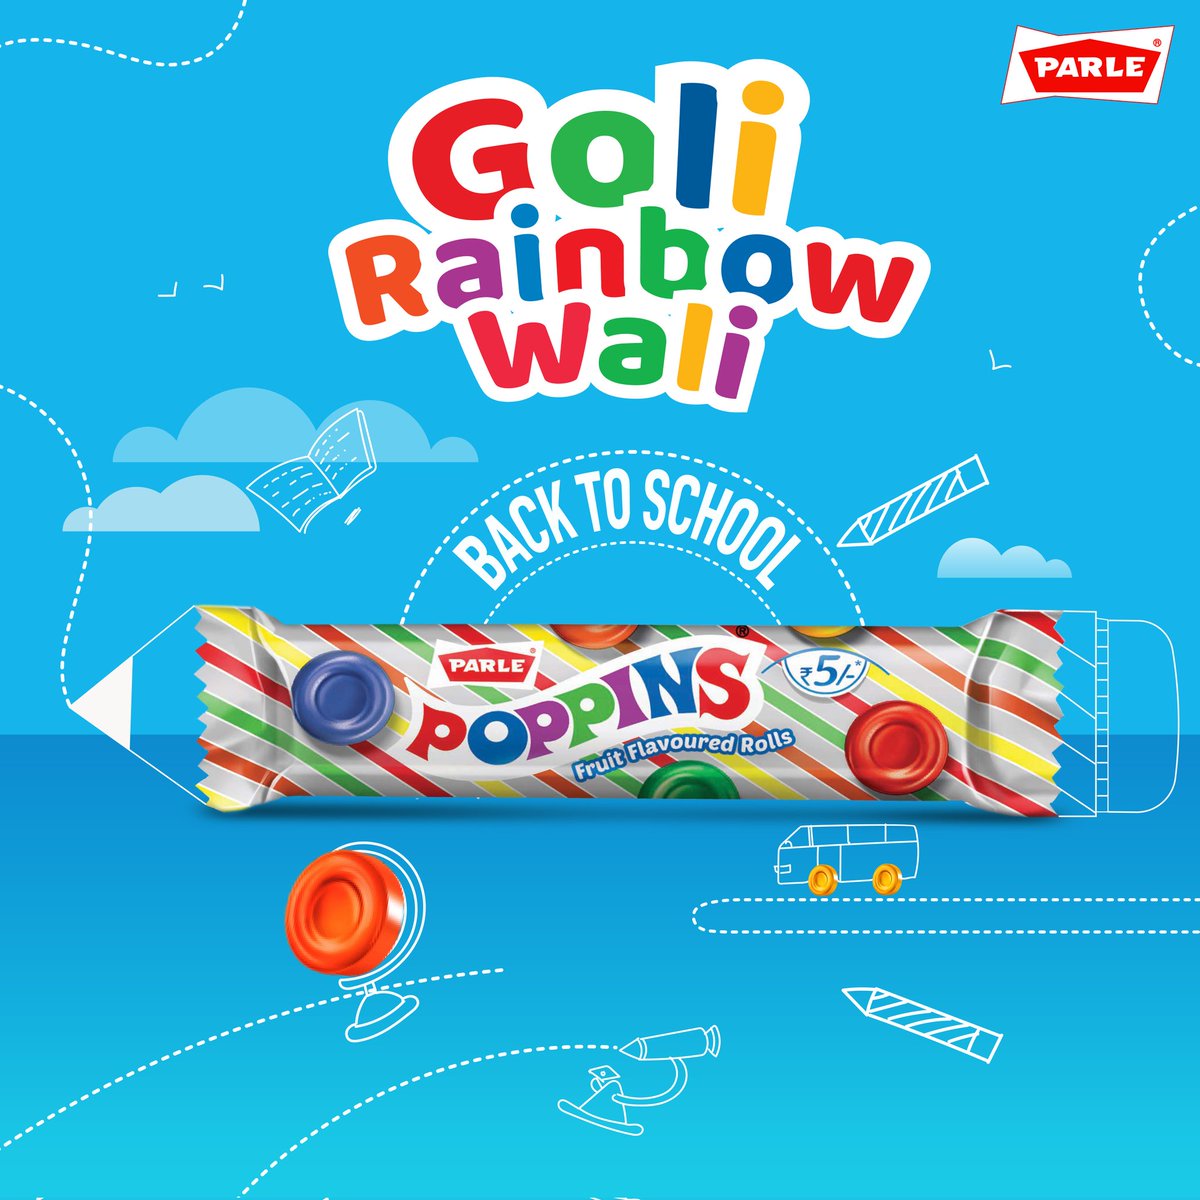 Goli Rainbow Wali. #ParleProducts #ParleFamily #ParleConfectionery #ParlePoppins #Poppins #Goli #Rainbow #Play #Fun #Childhood #School